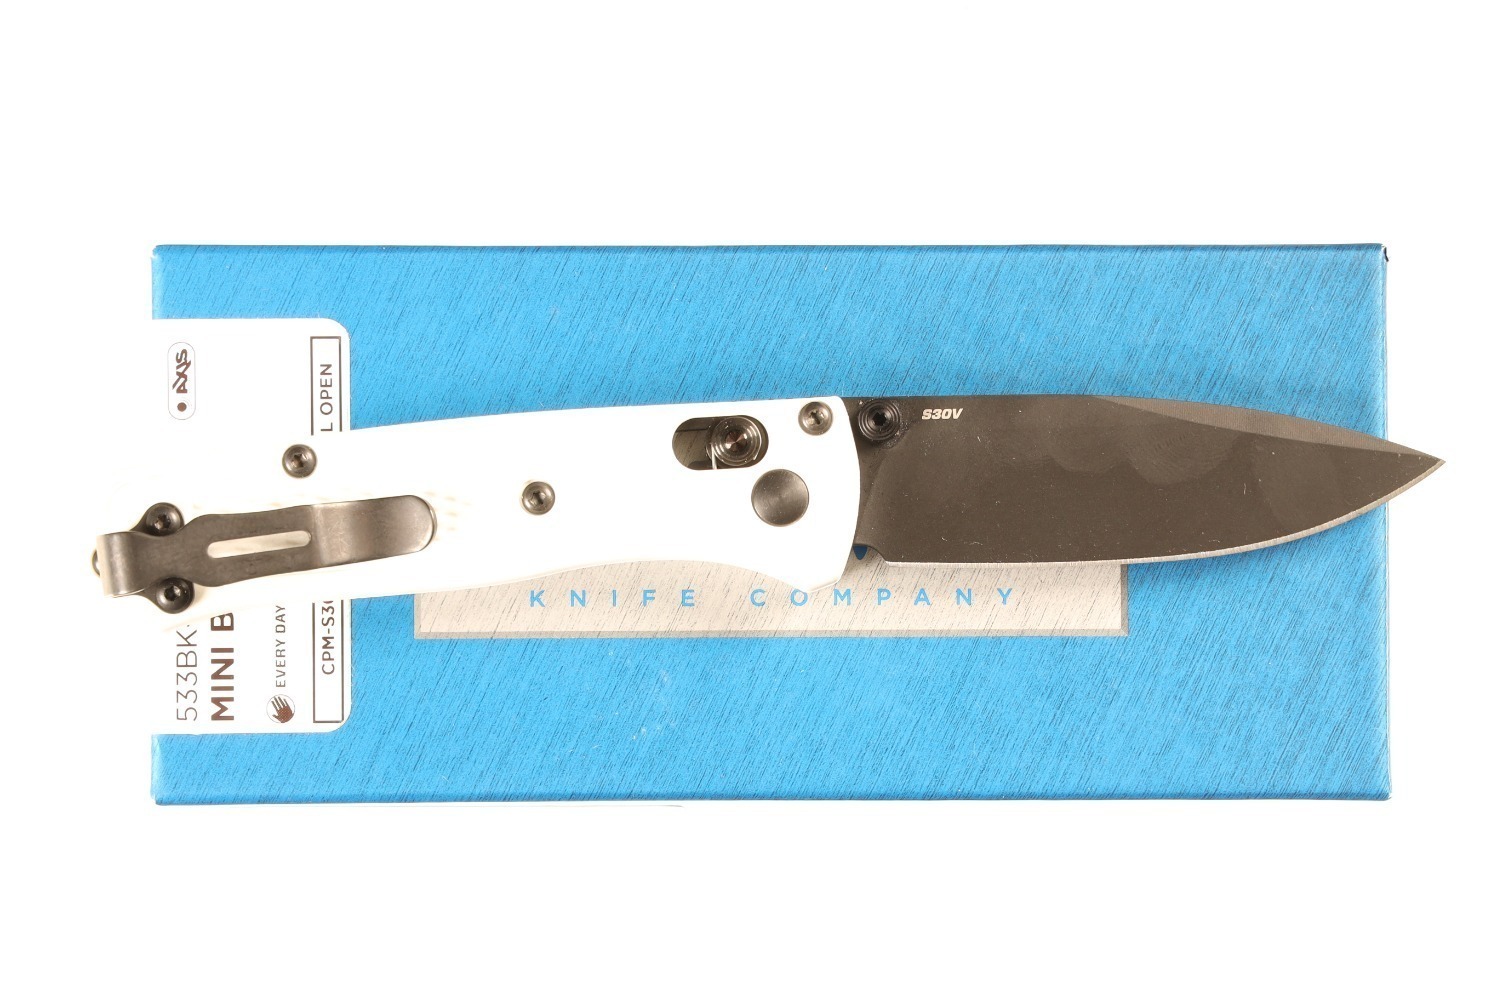 Benchmade Mini-Bugout knife